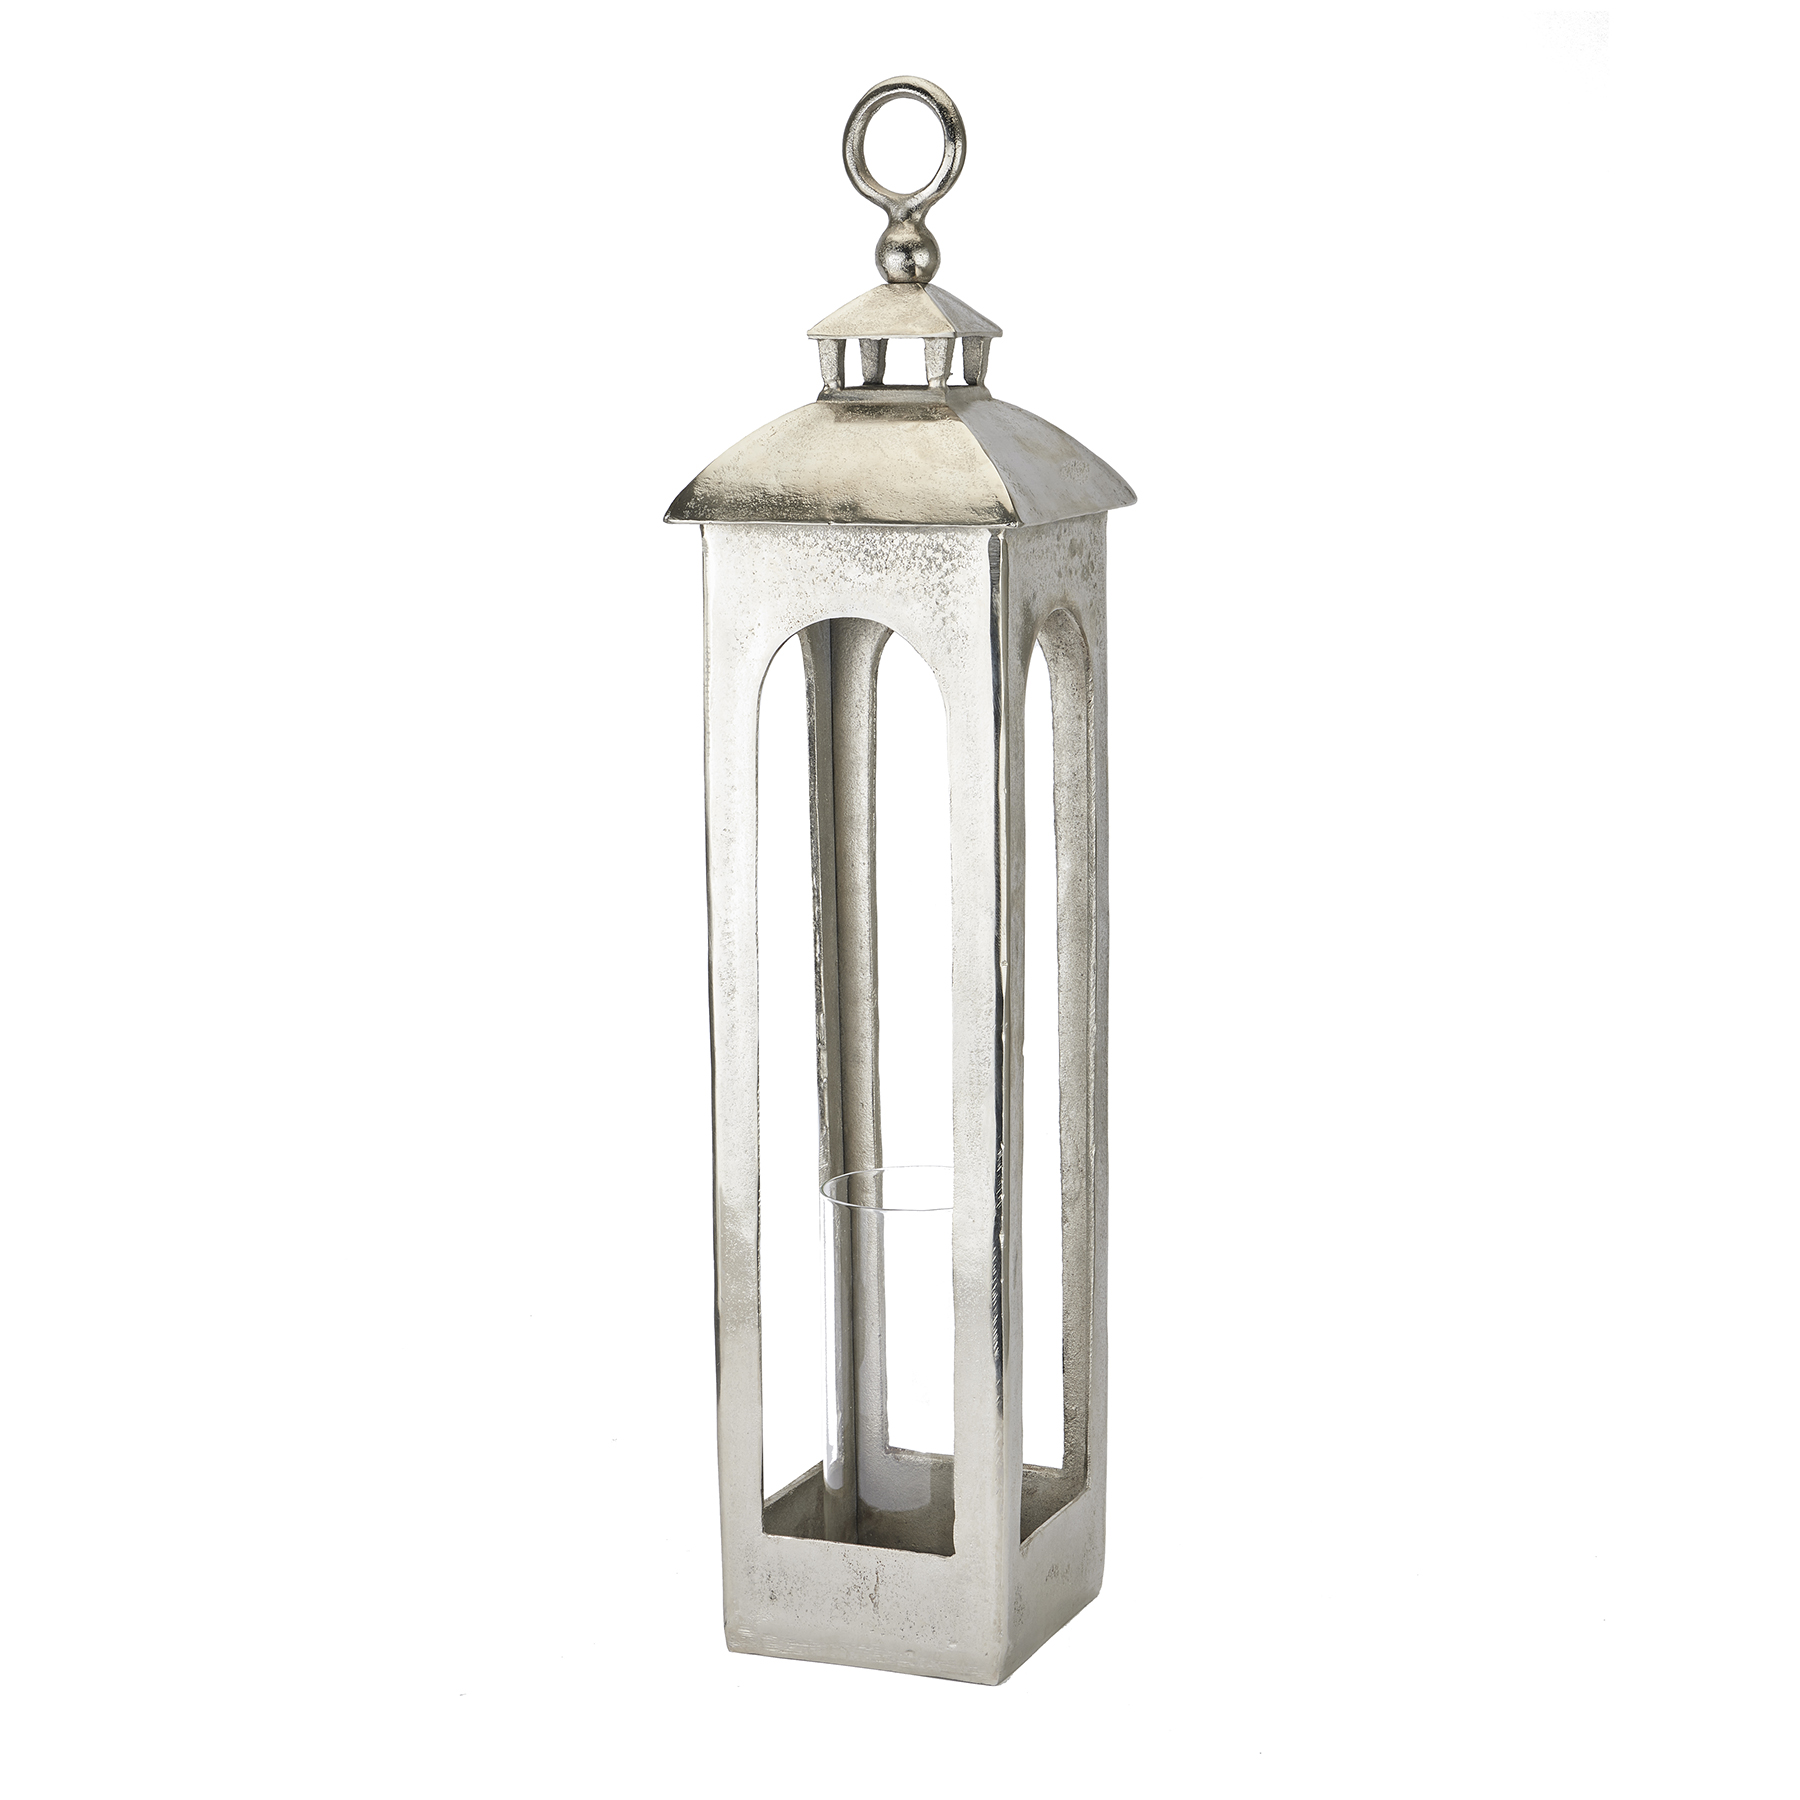 Farrah Collection Cast Aluminium Tall Loop Top Lantern - Image 1